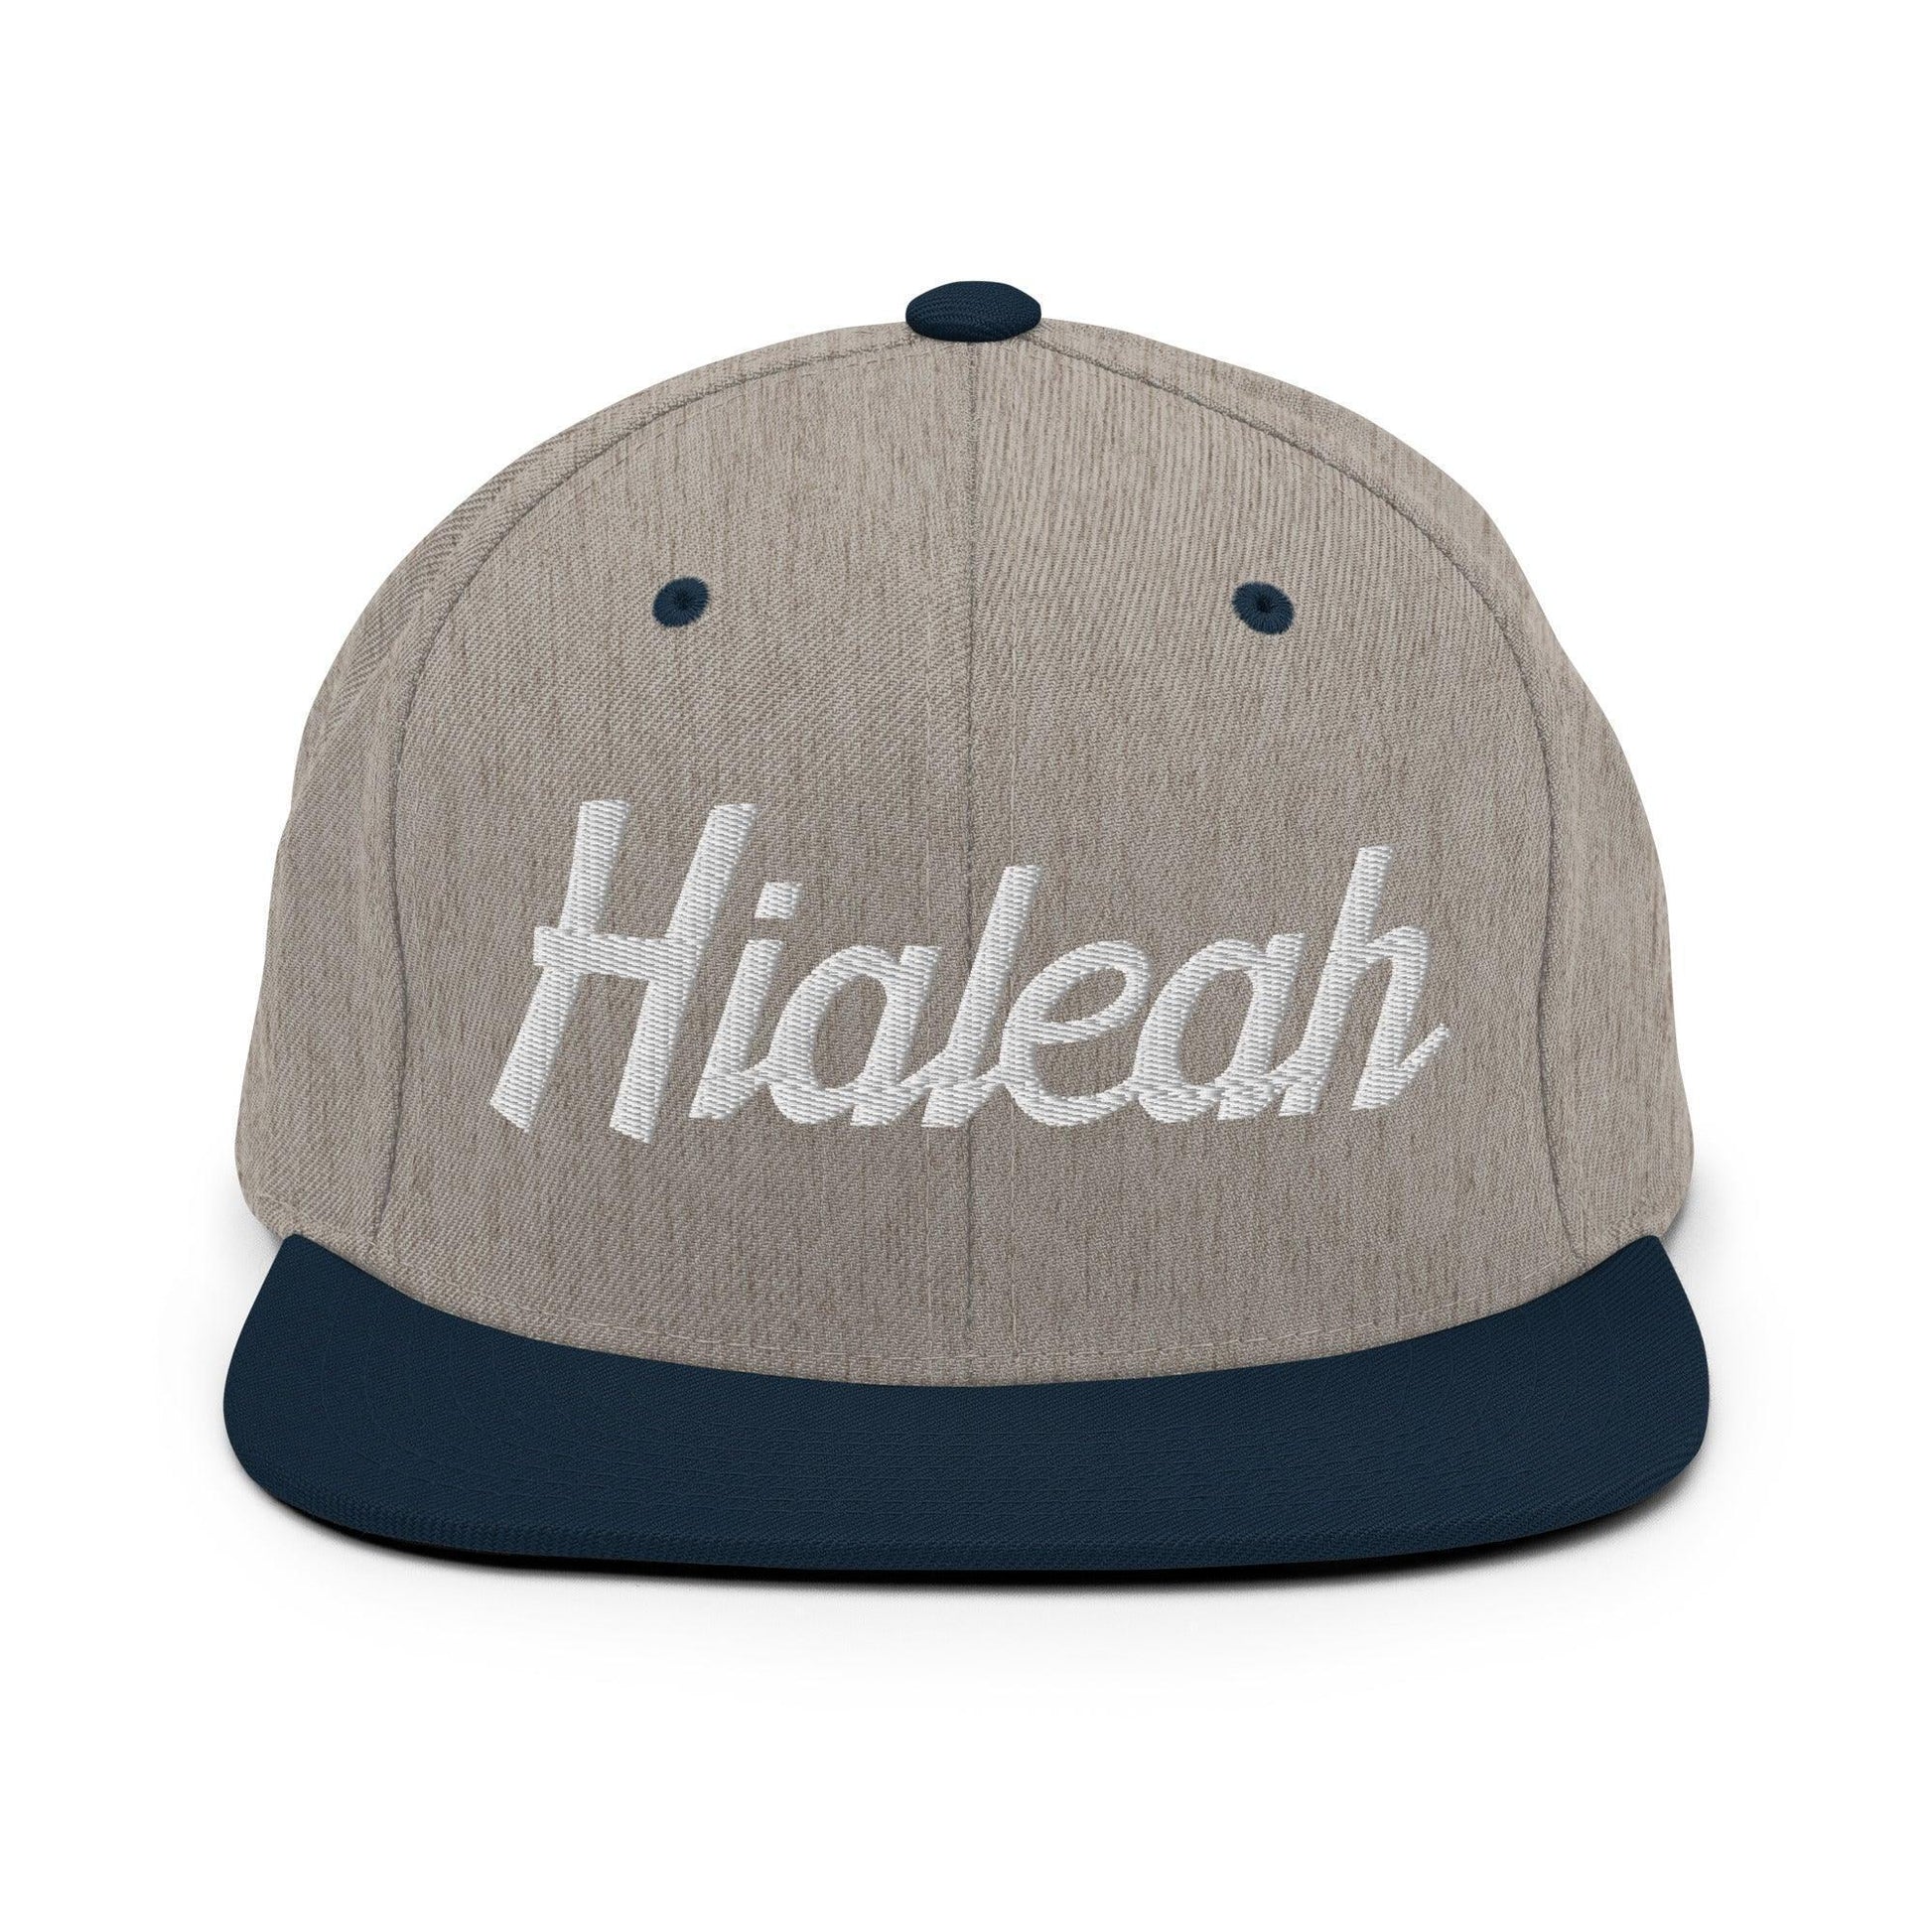 Hialeah Script Snapback Hat Heather Grey/ Navy